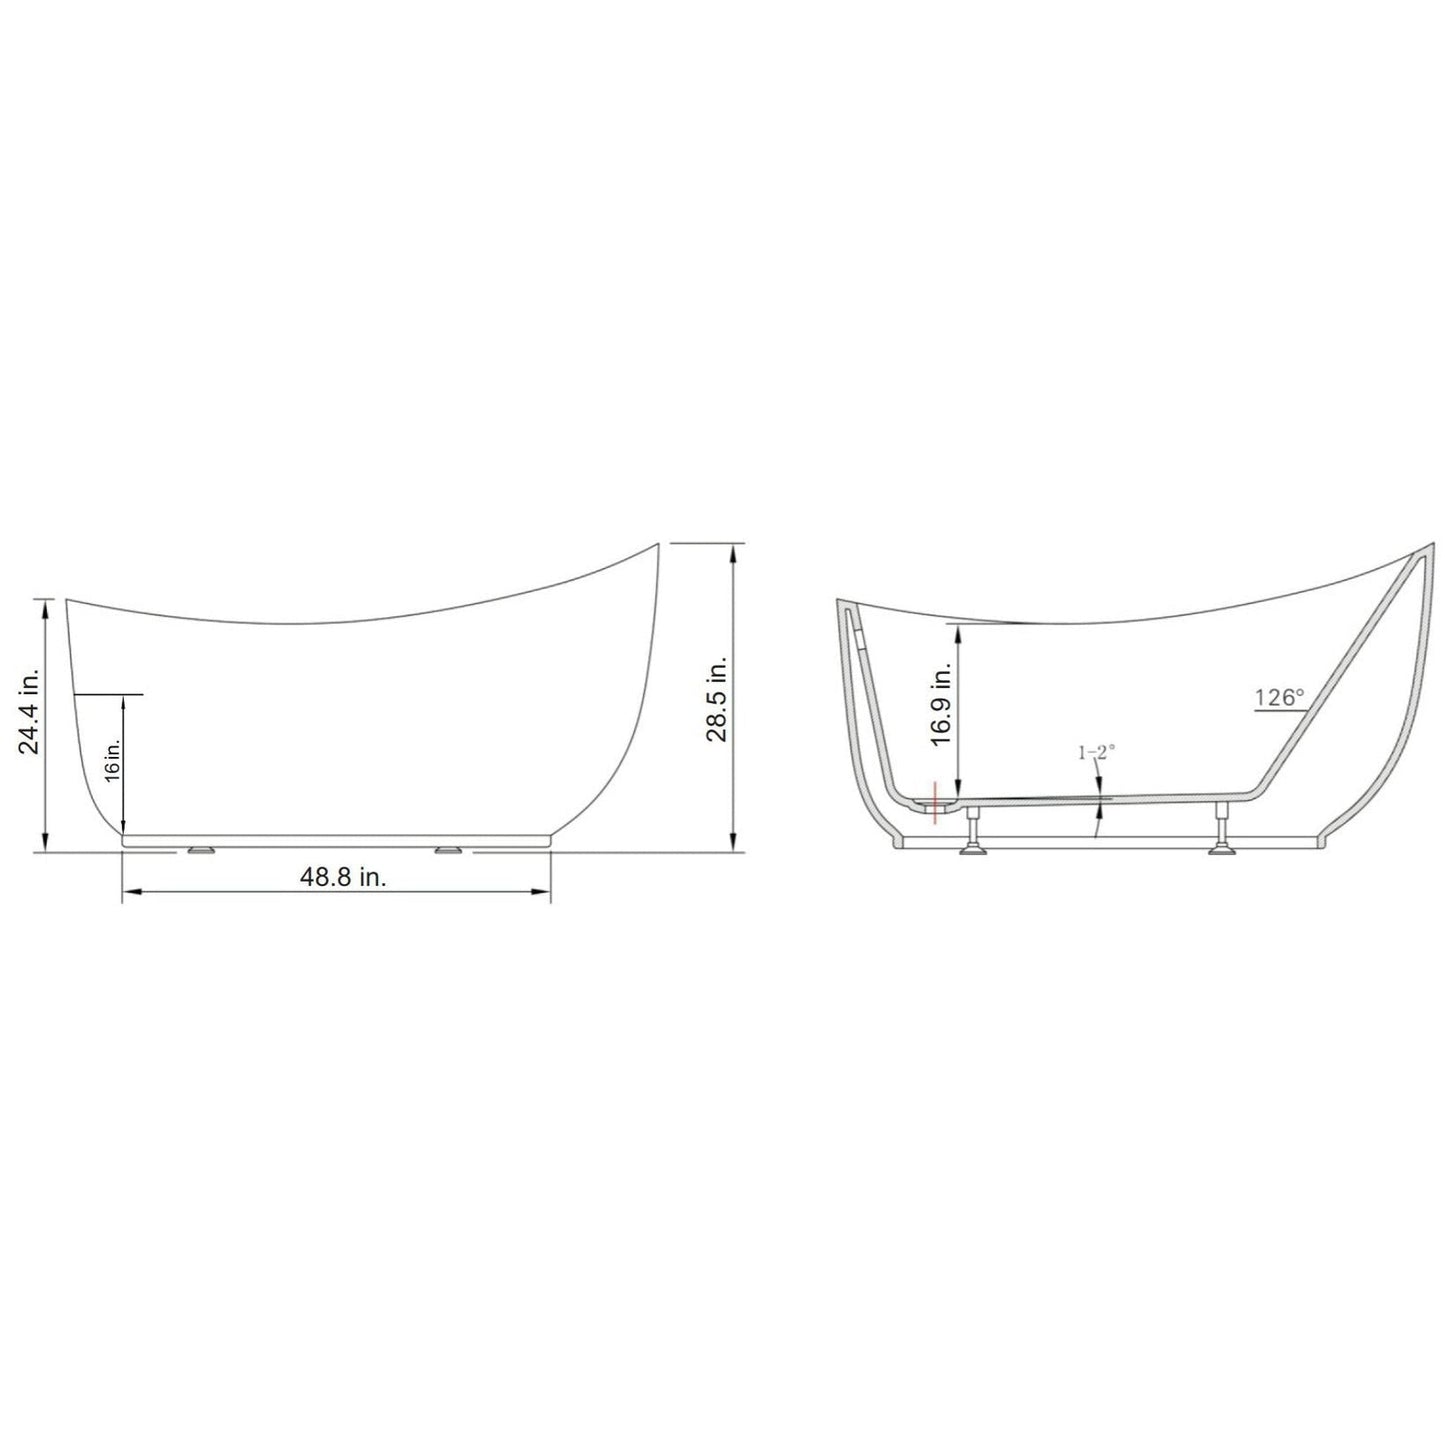 Vinnova Everlie 71" x 35" White Rectangular Freestanding Single Slipper Soaking Acrylic Bathtub